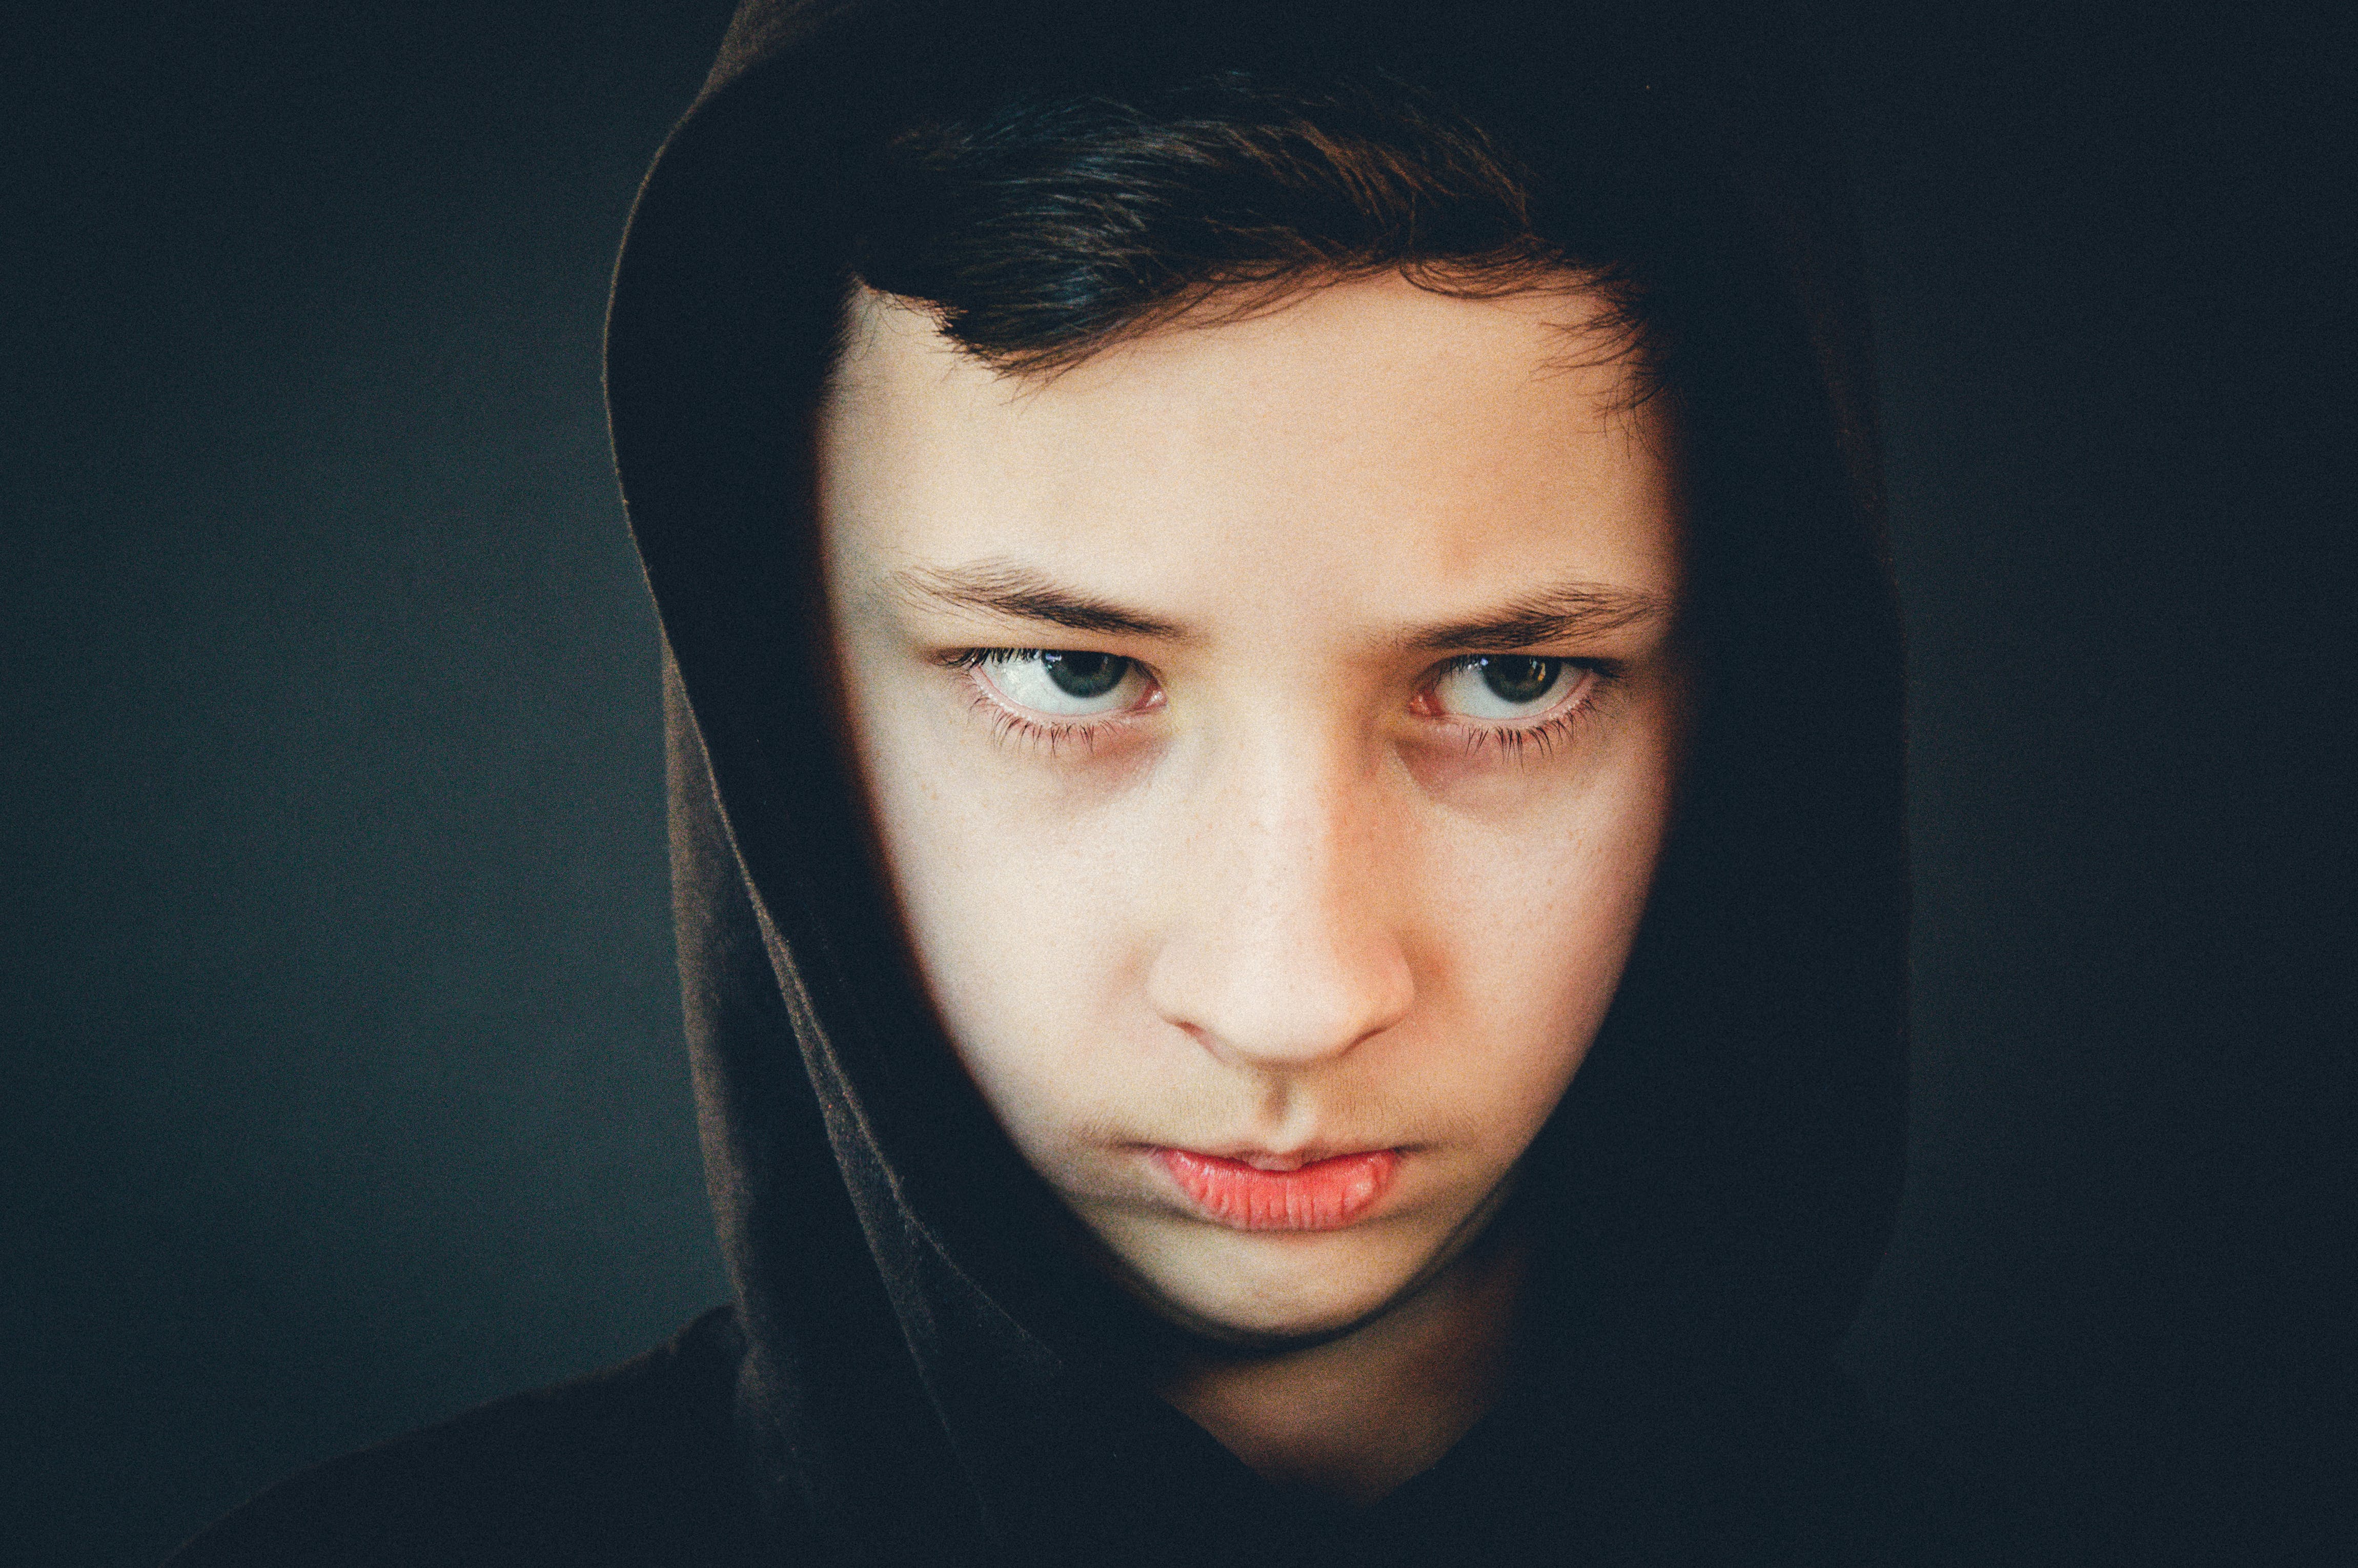 An upset boy looking glum while wearing a hoodie | Source: Pexels